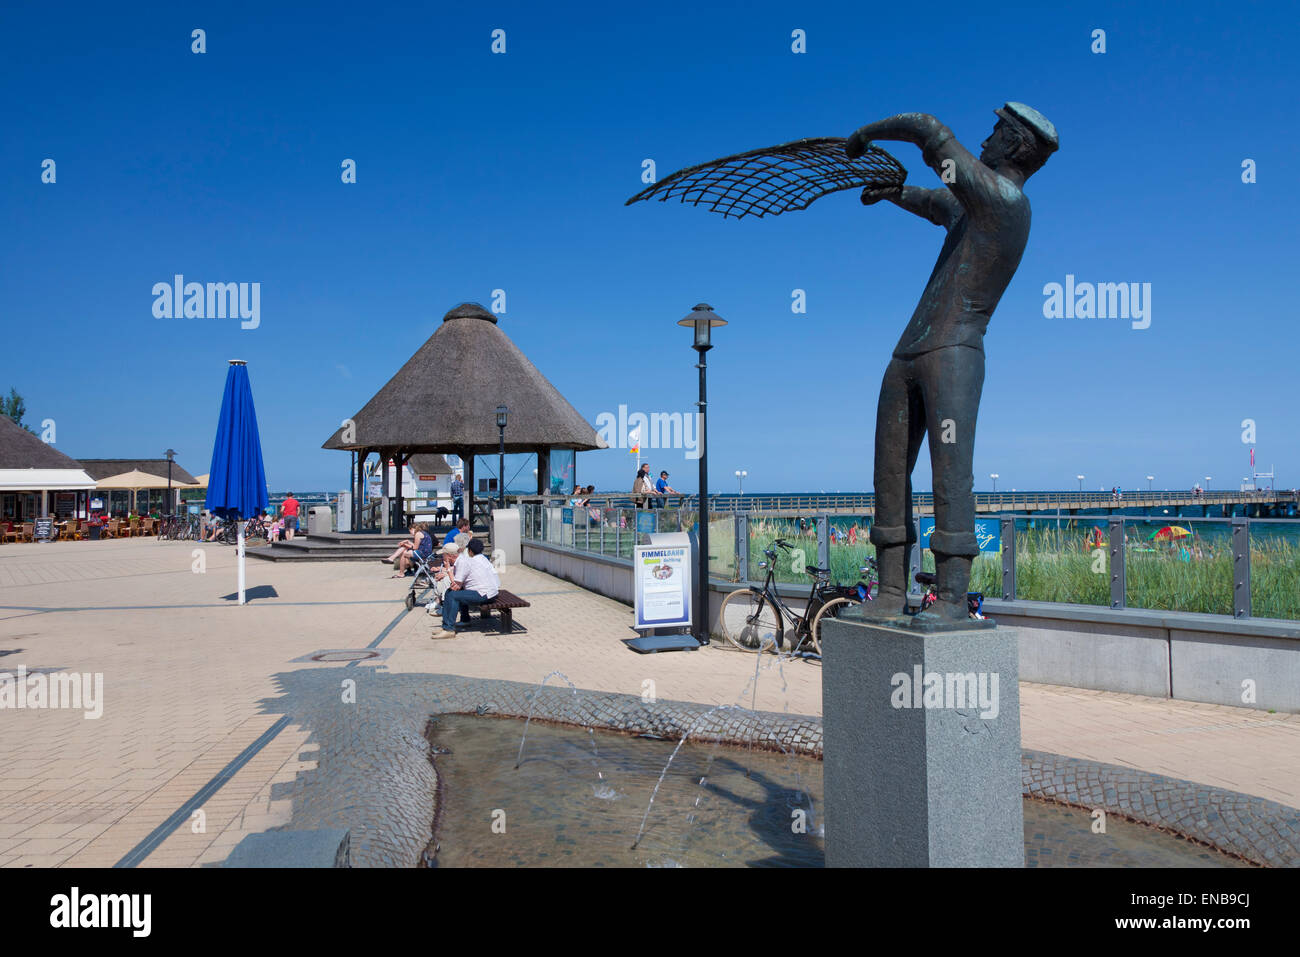 Statue along the promenade at the seaside resort Haffkrug, Scharbeutz, Schleswig-Holstein, Germany Stock Photo